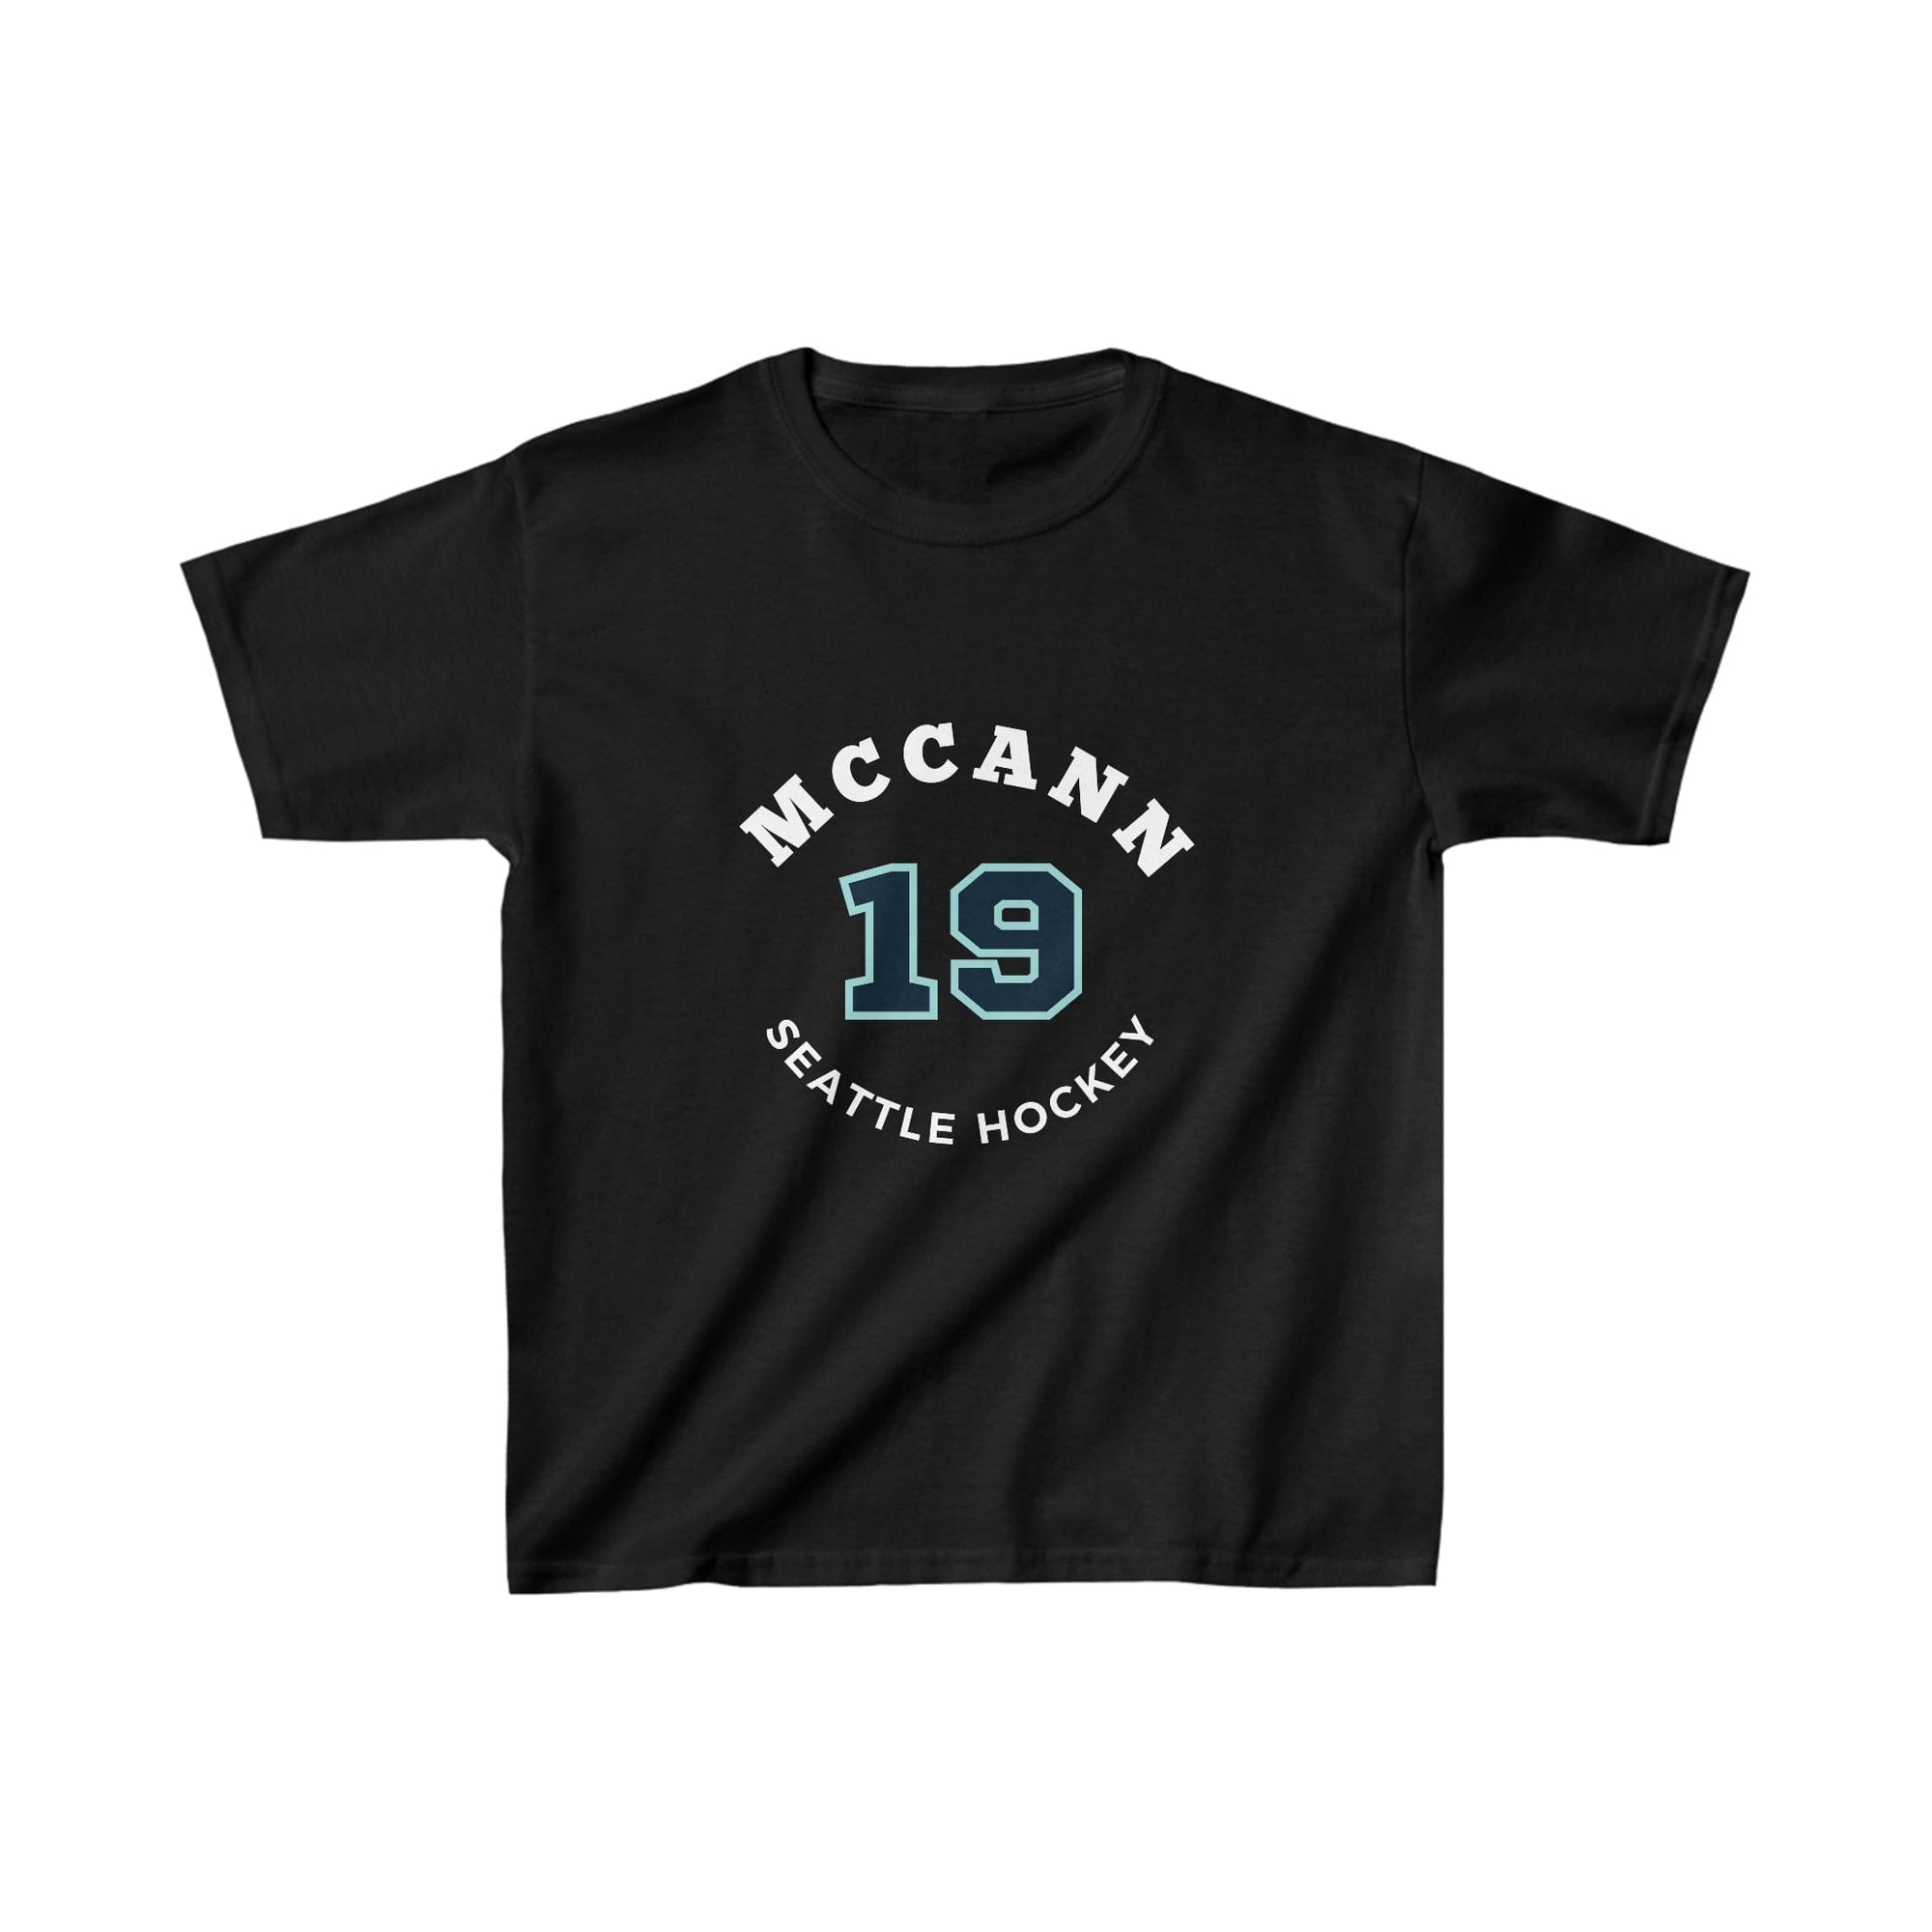 Kids clothes McCann 19 Seattle Hockey Number Arch Design Kids Tee